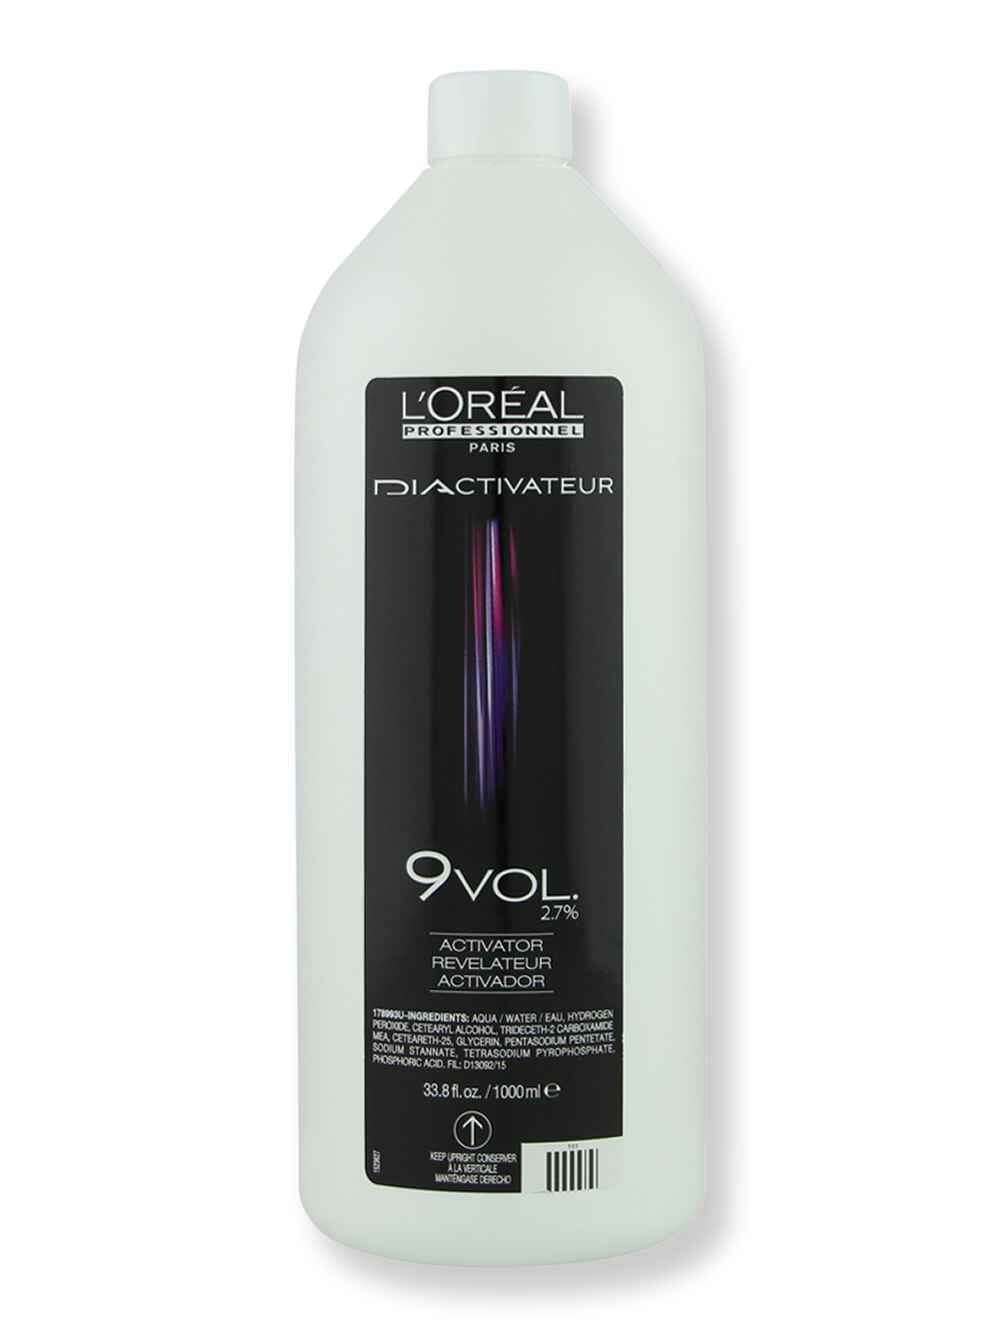 L'Oreal Professionnel L'Oreal Professionnel DIActivateur Developer 9 Volume Liter Styling Treatments 